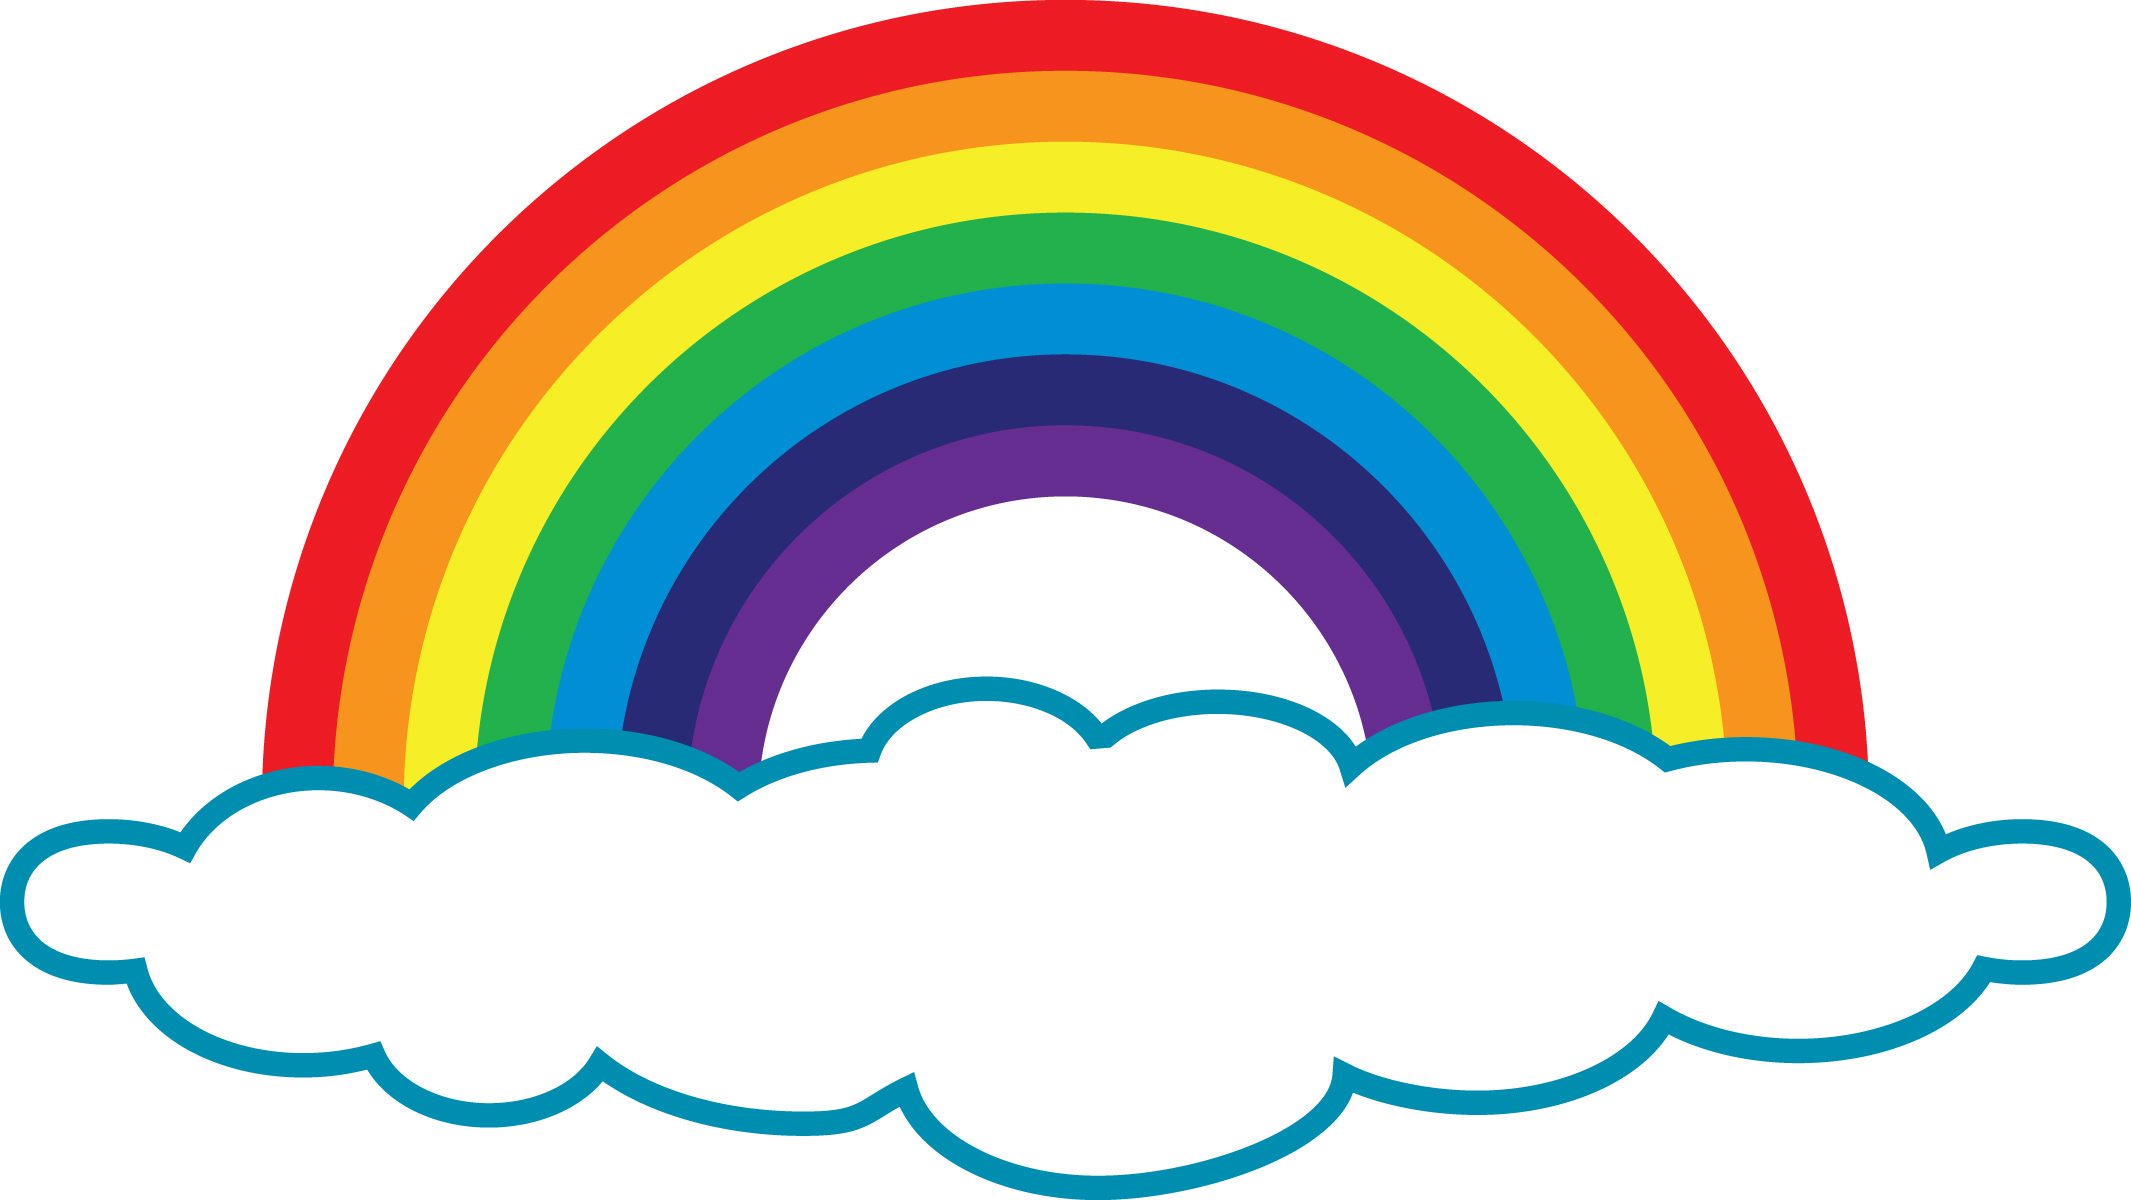 Free Rainbow, Download Free Clip Art, Free Clip Art on